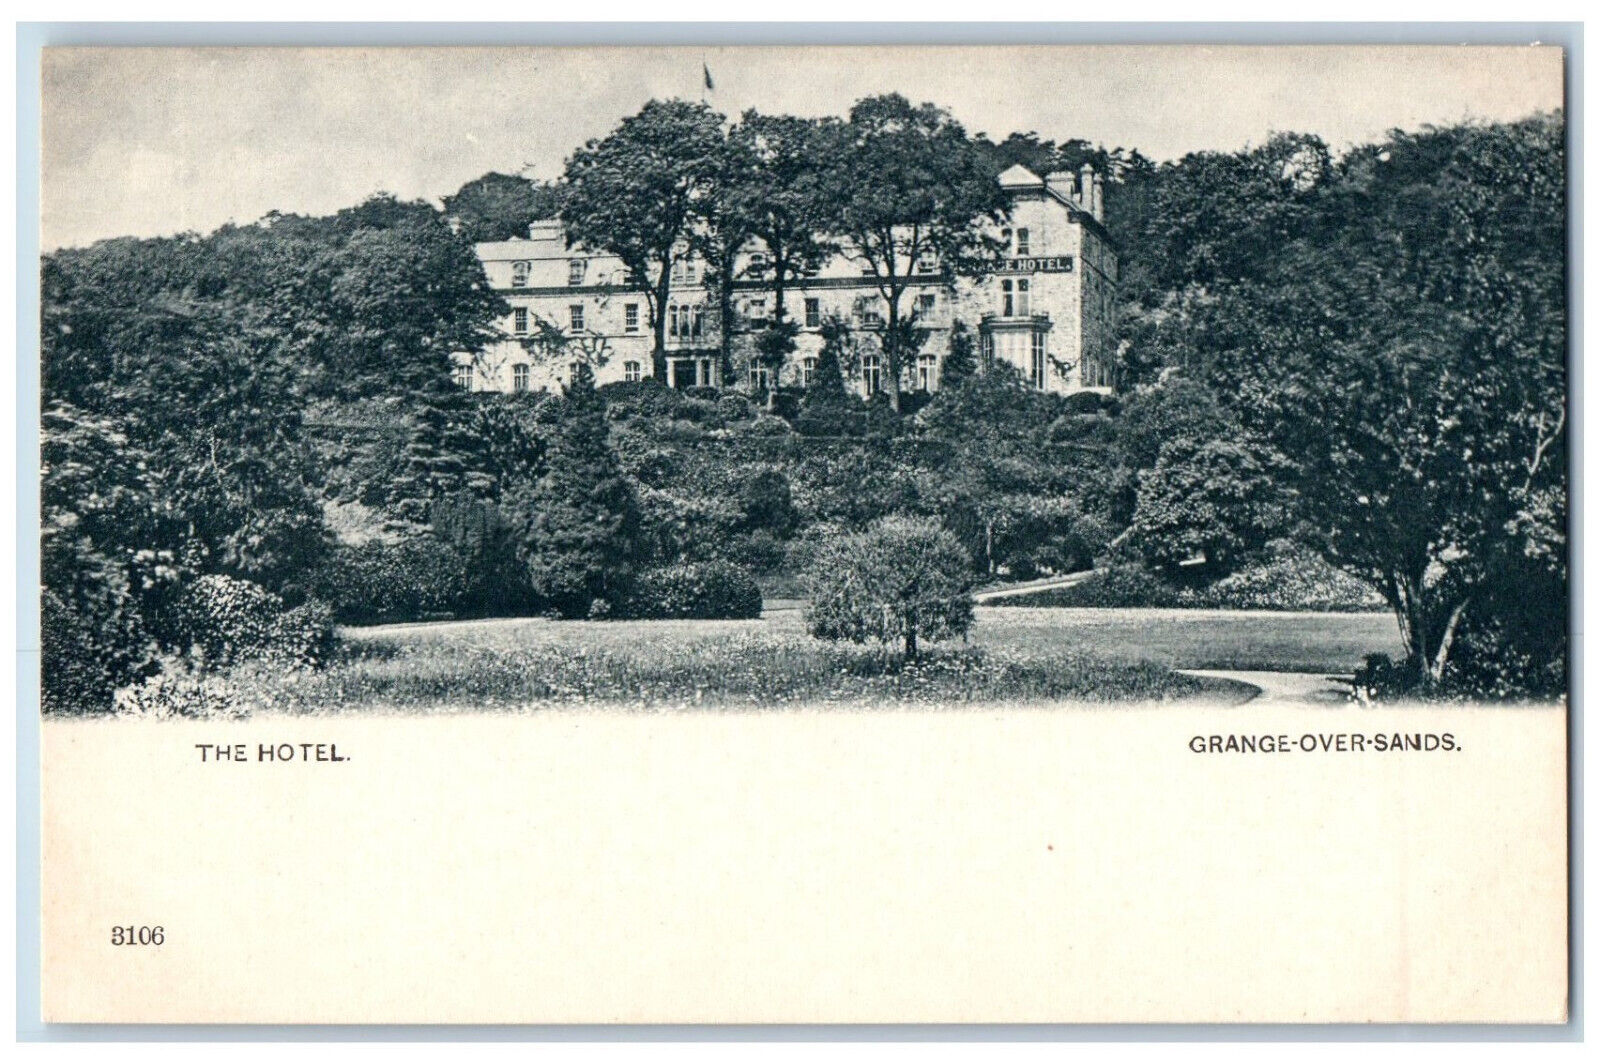 Grange-Over-Sands Cumbria England Postcard The Hotel c1905 Antique Unposted